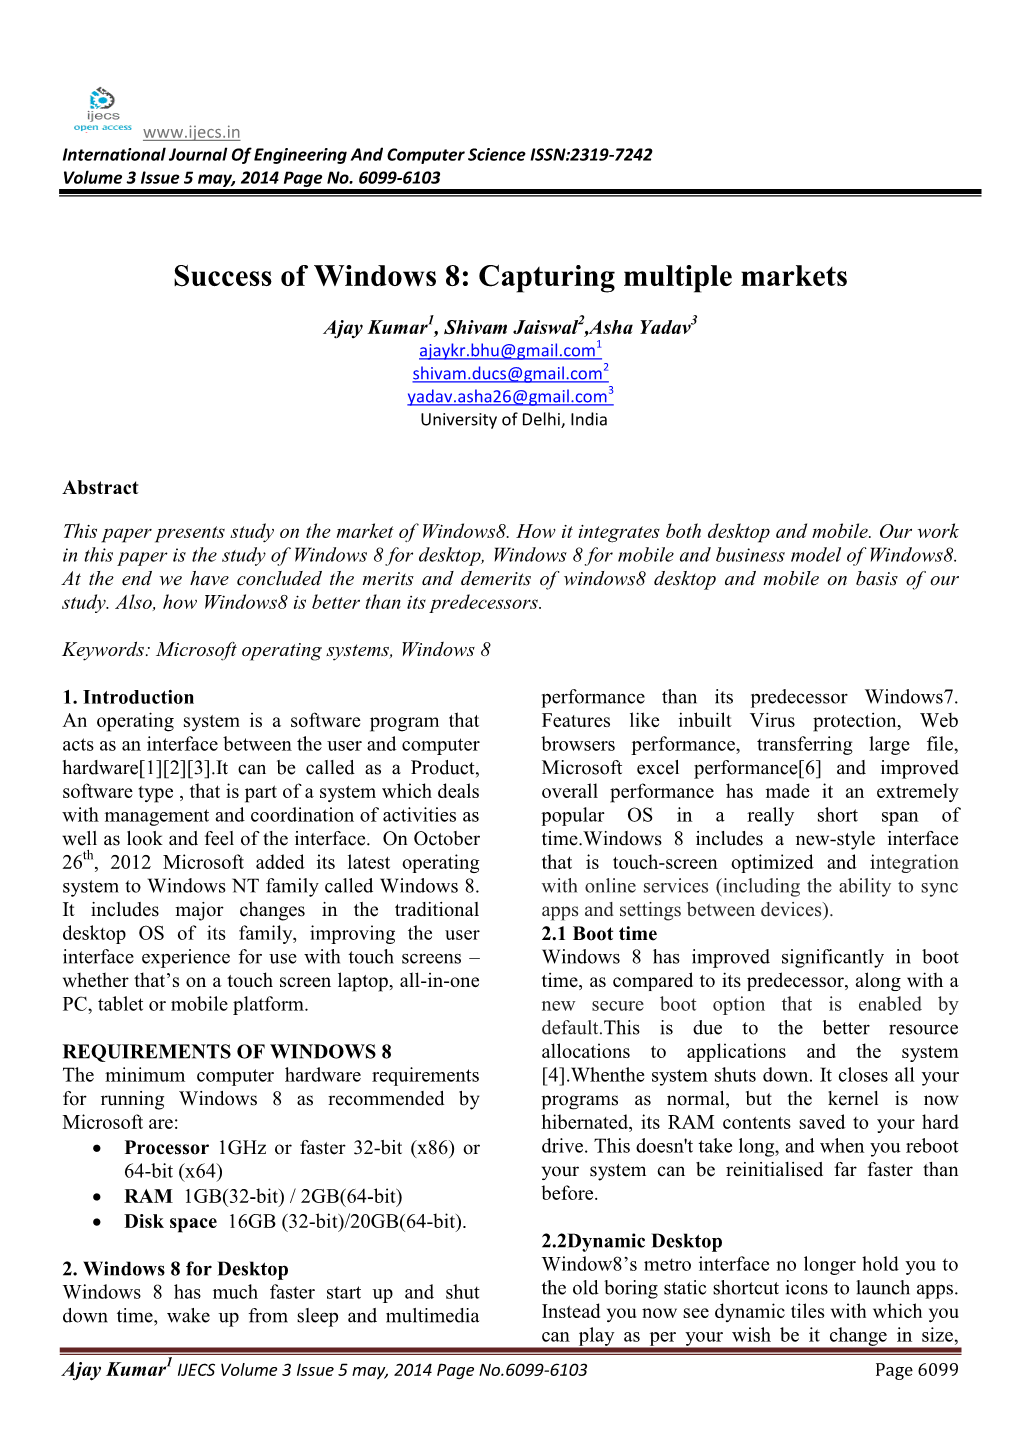 Success of Windows 8: Capturing Multiple Markets